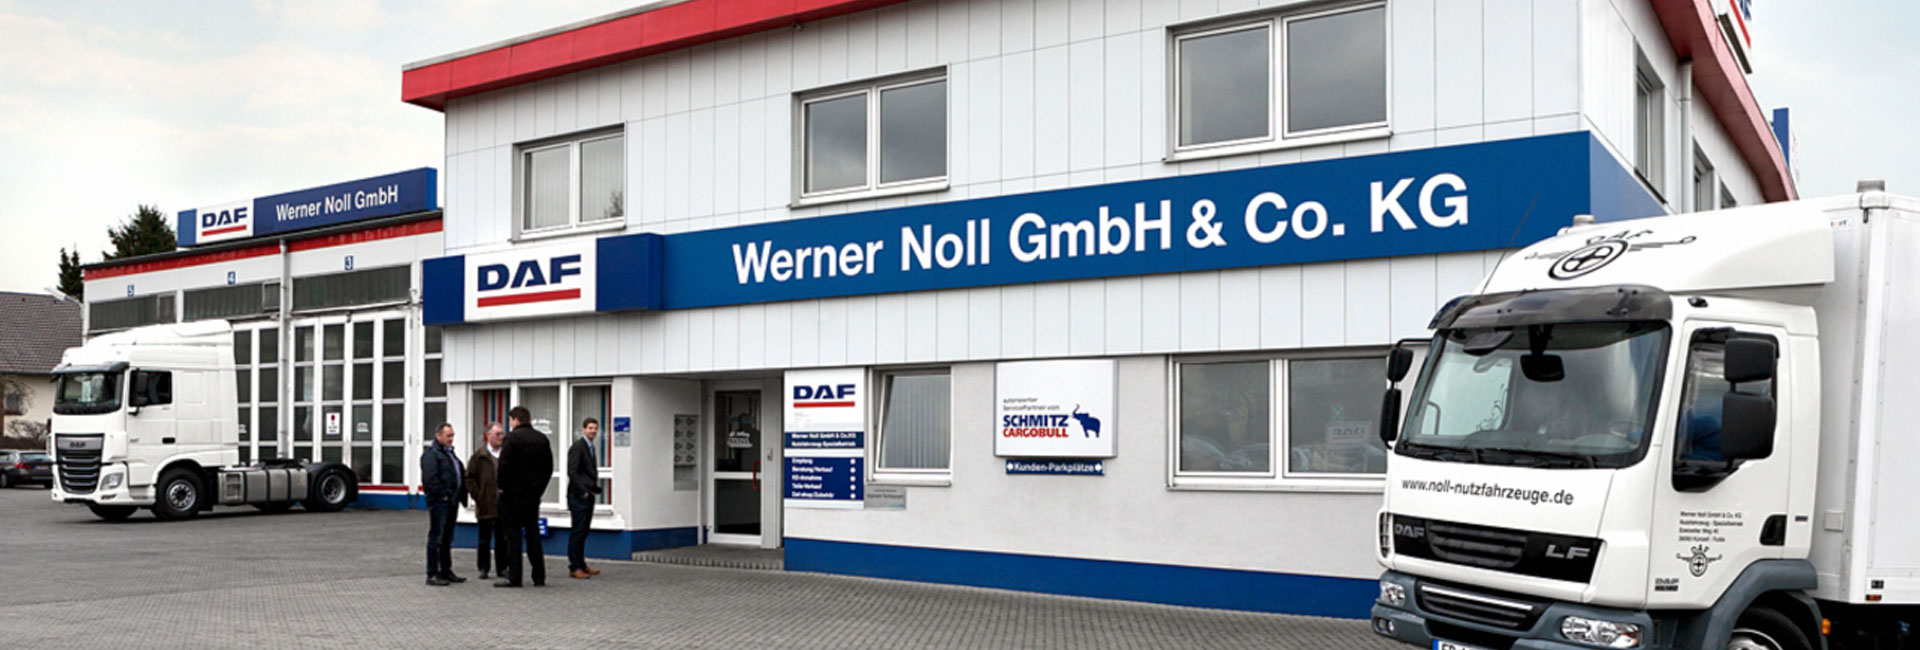 DAF Werner Noll GmbH & Co. KG Firmengebäude